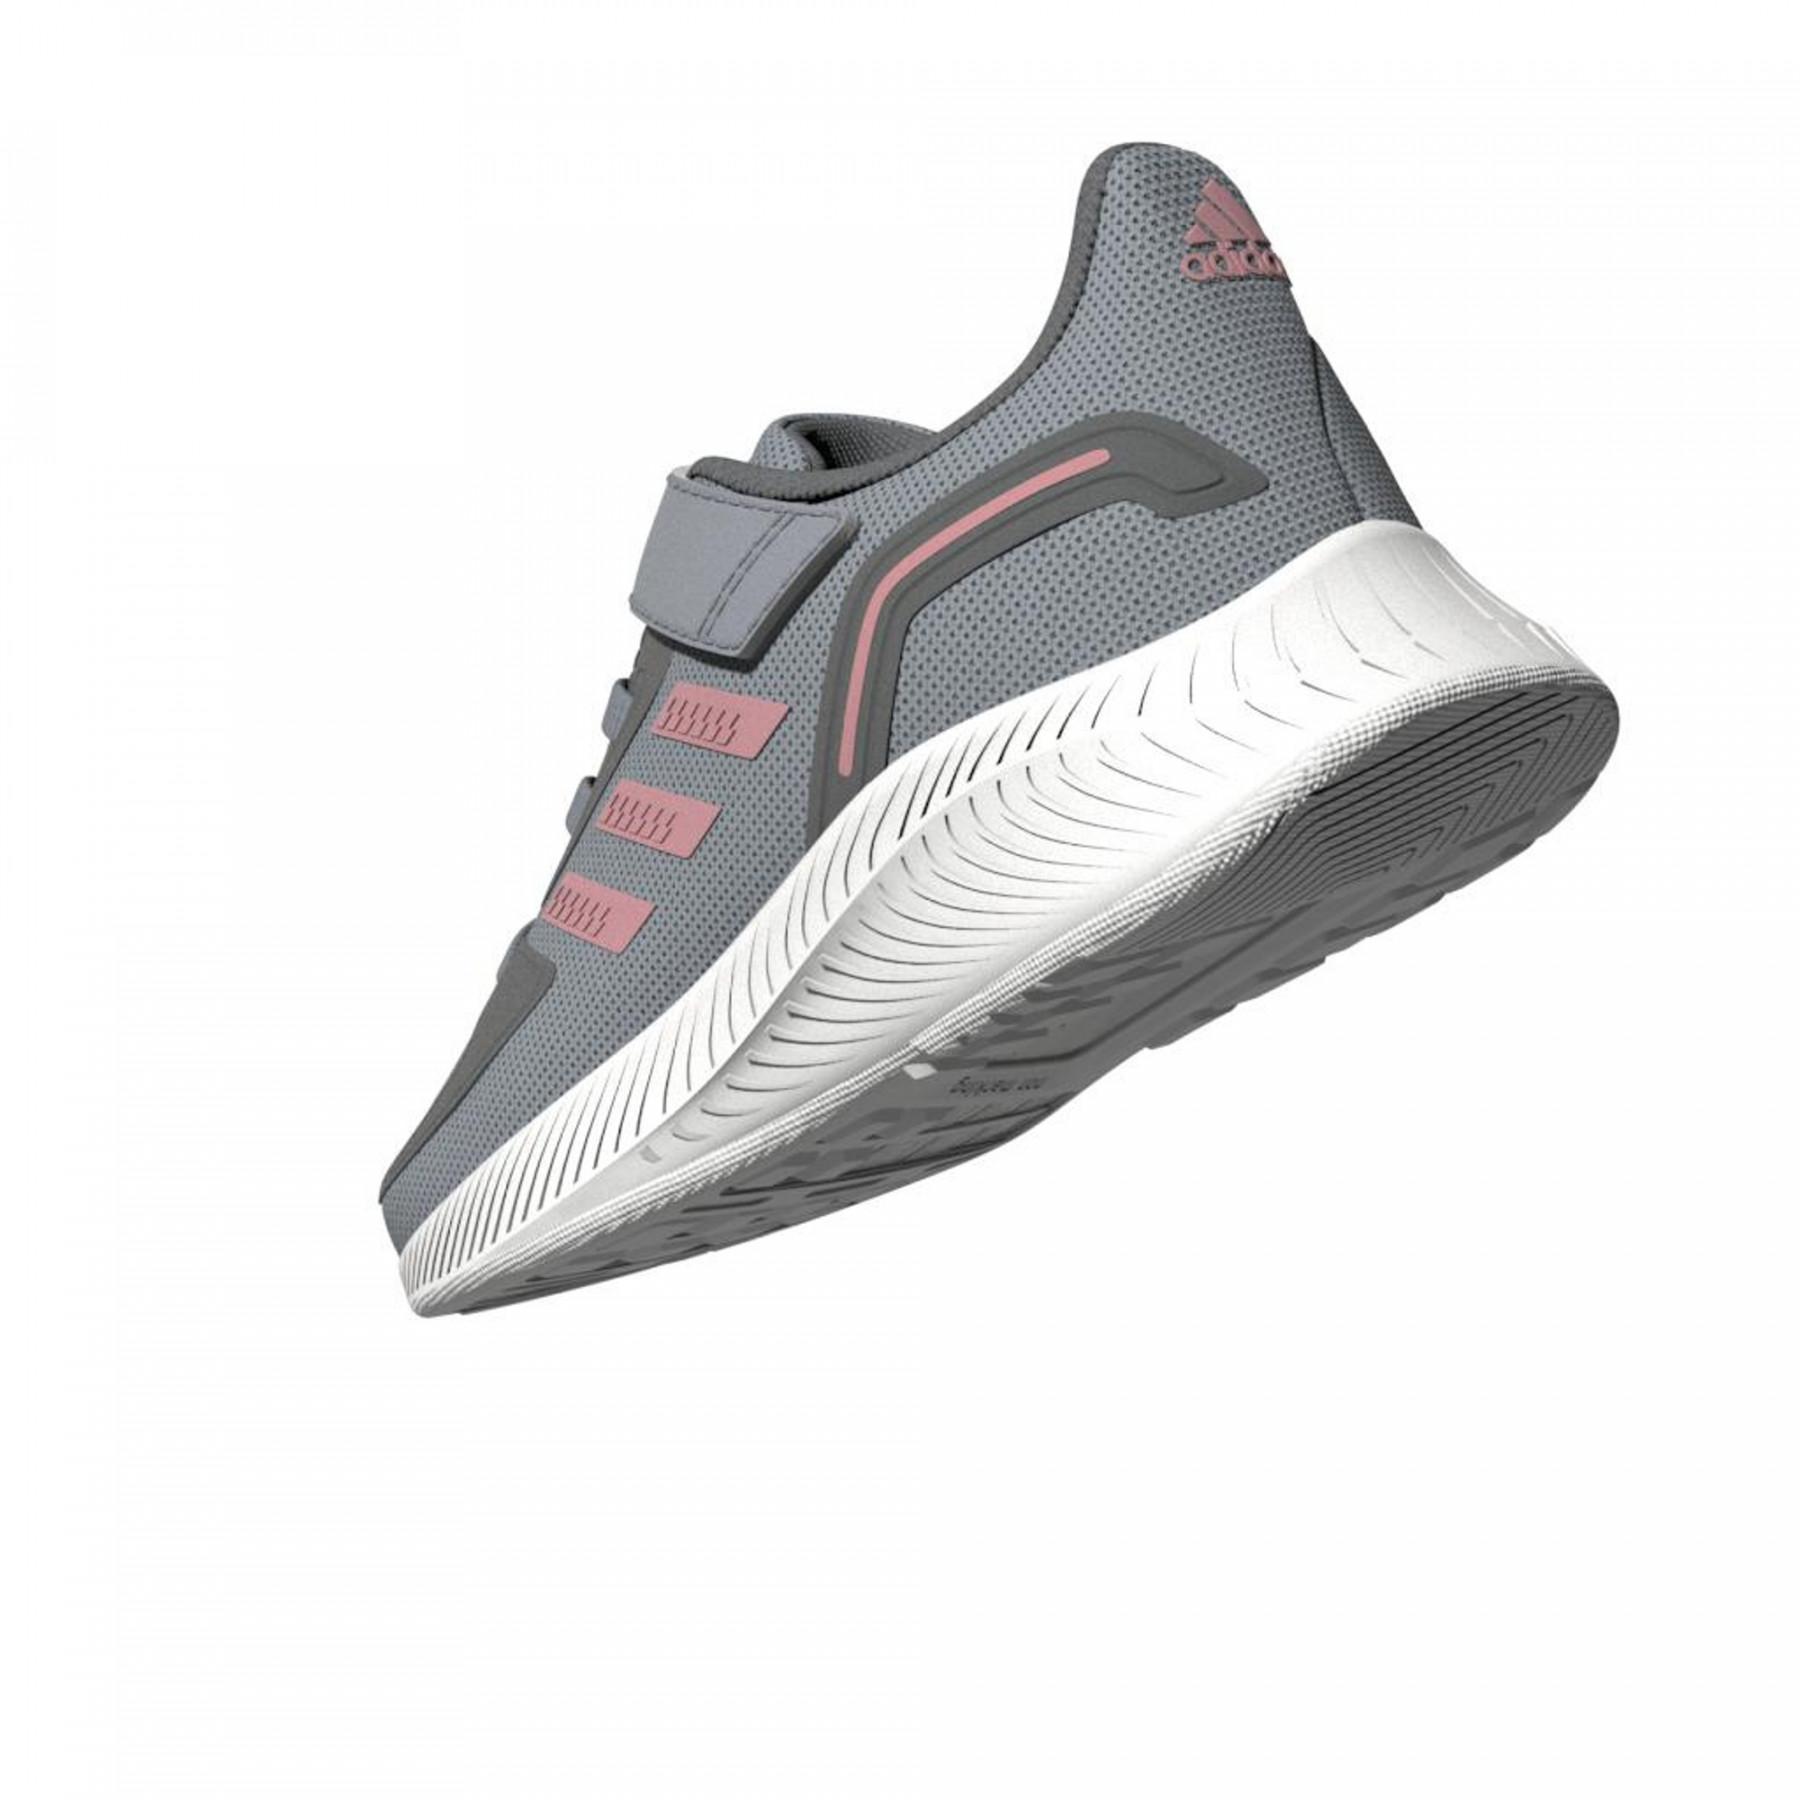 Children's shoes adidas Run Falcon 2.0 I